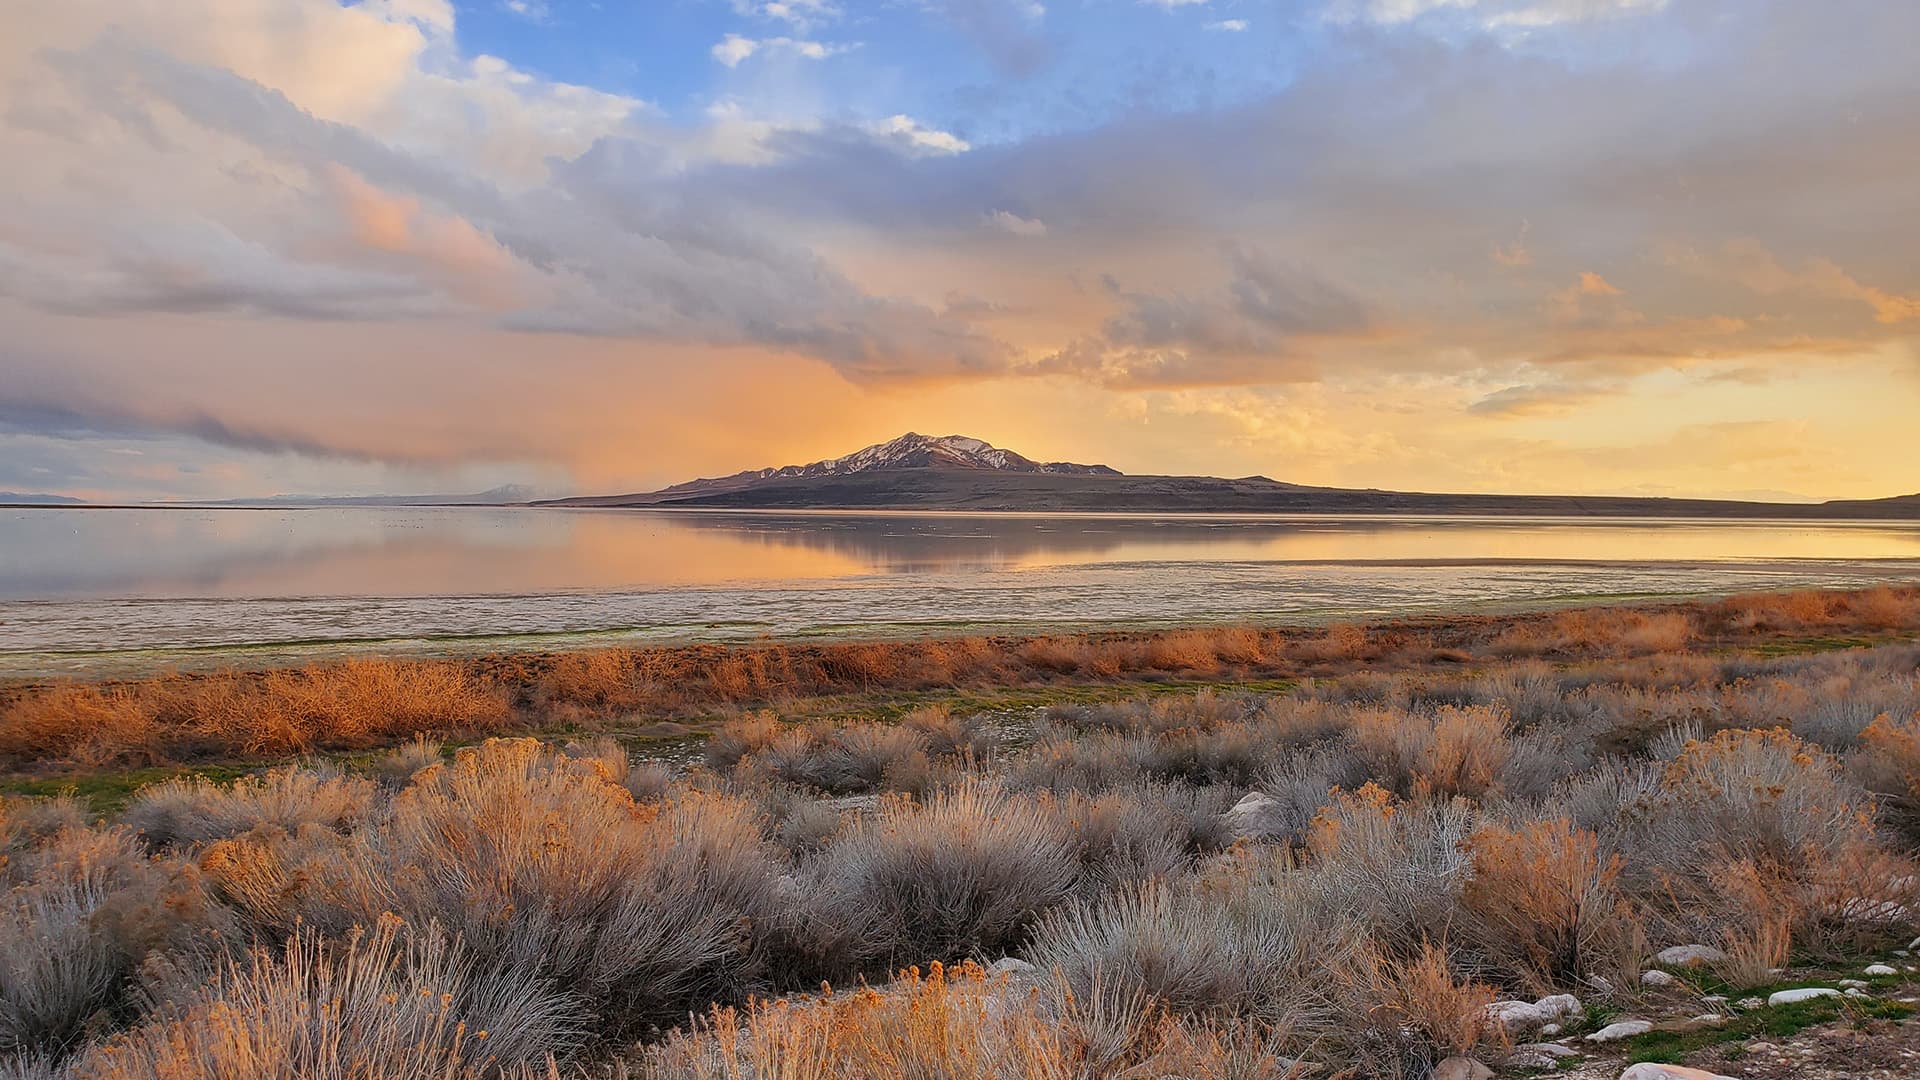 Antelope Island on Great Salt Lake. Credit: Crystal Ross